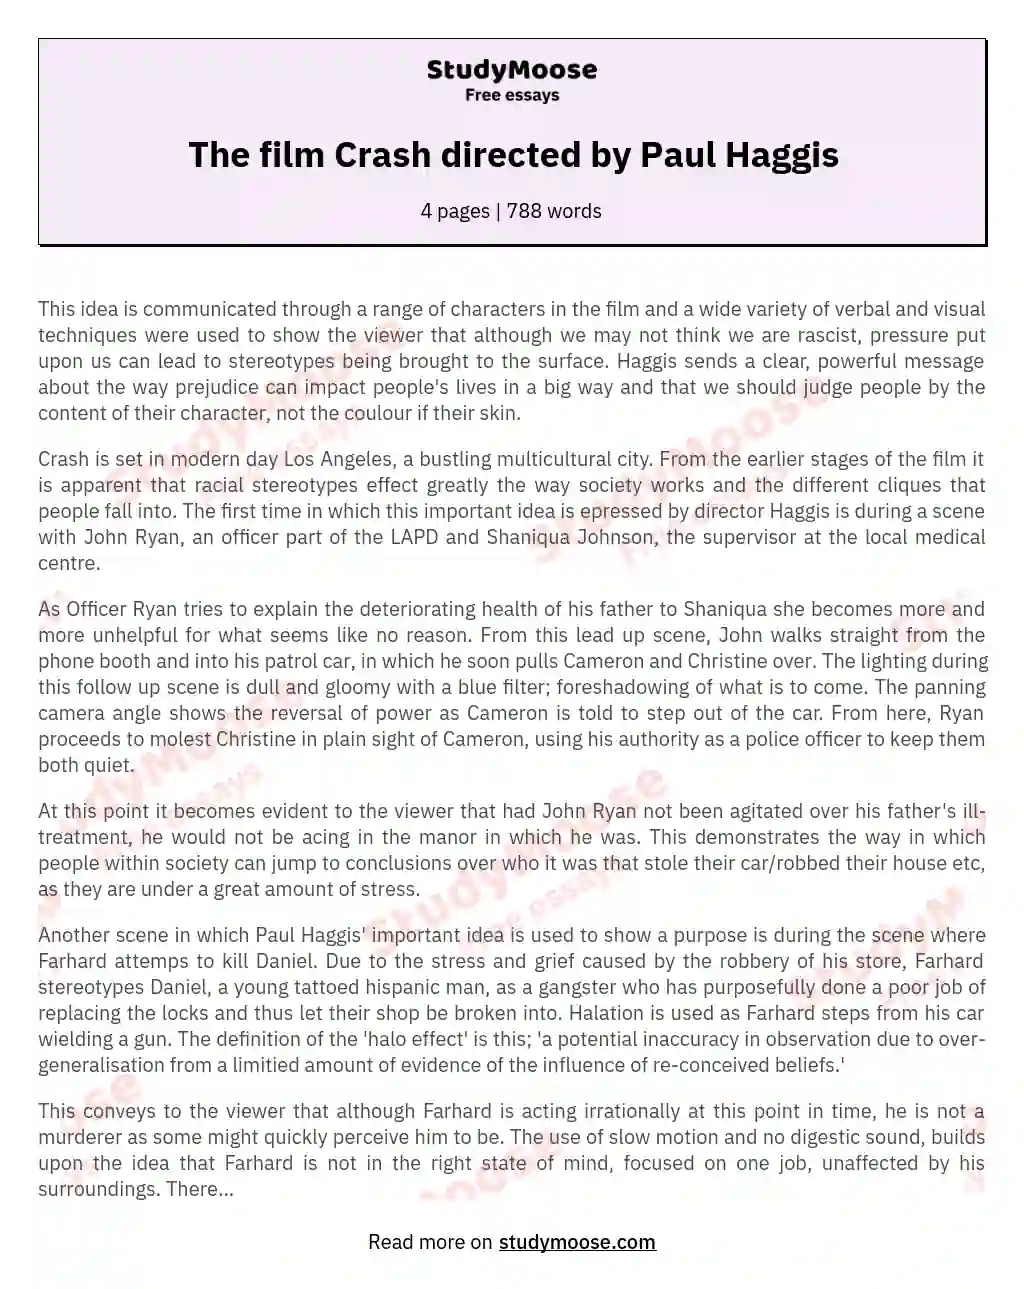 The film Crash directed by Paul Haggis essay